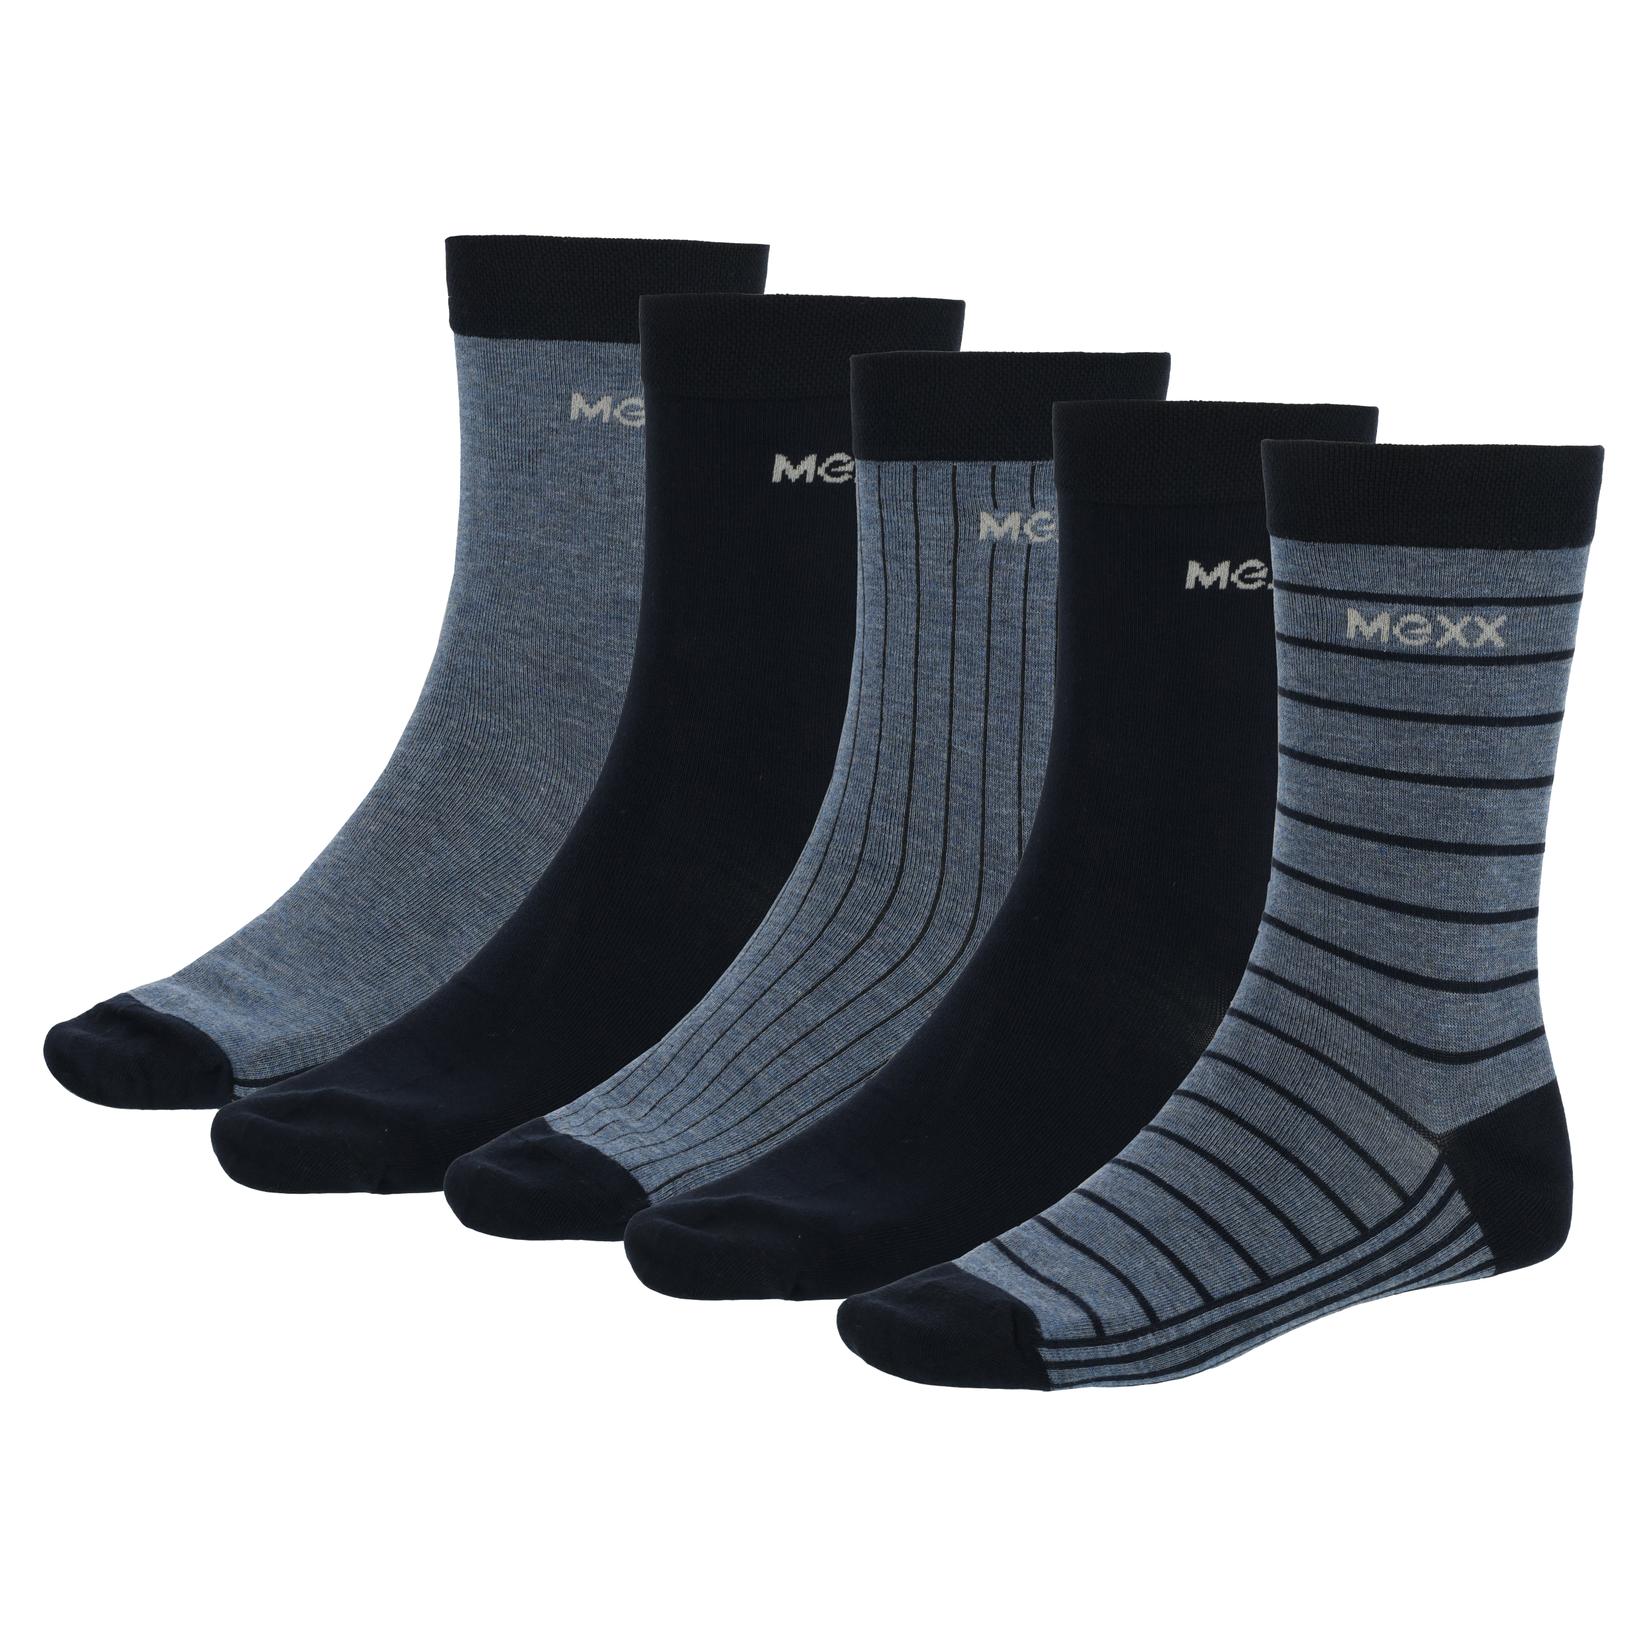 Selected image for MEXX Muške čarape Design Bamboo, Pakovanje od 5 pari